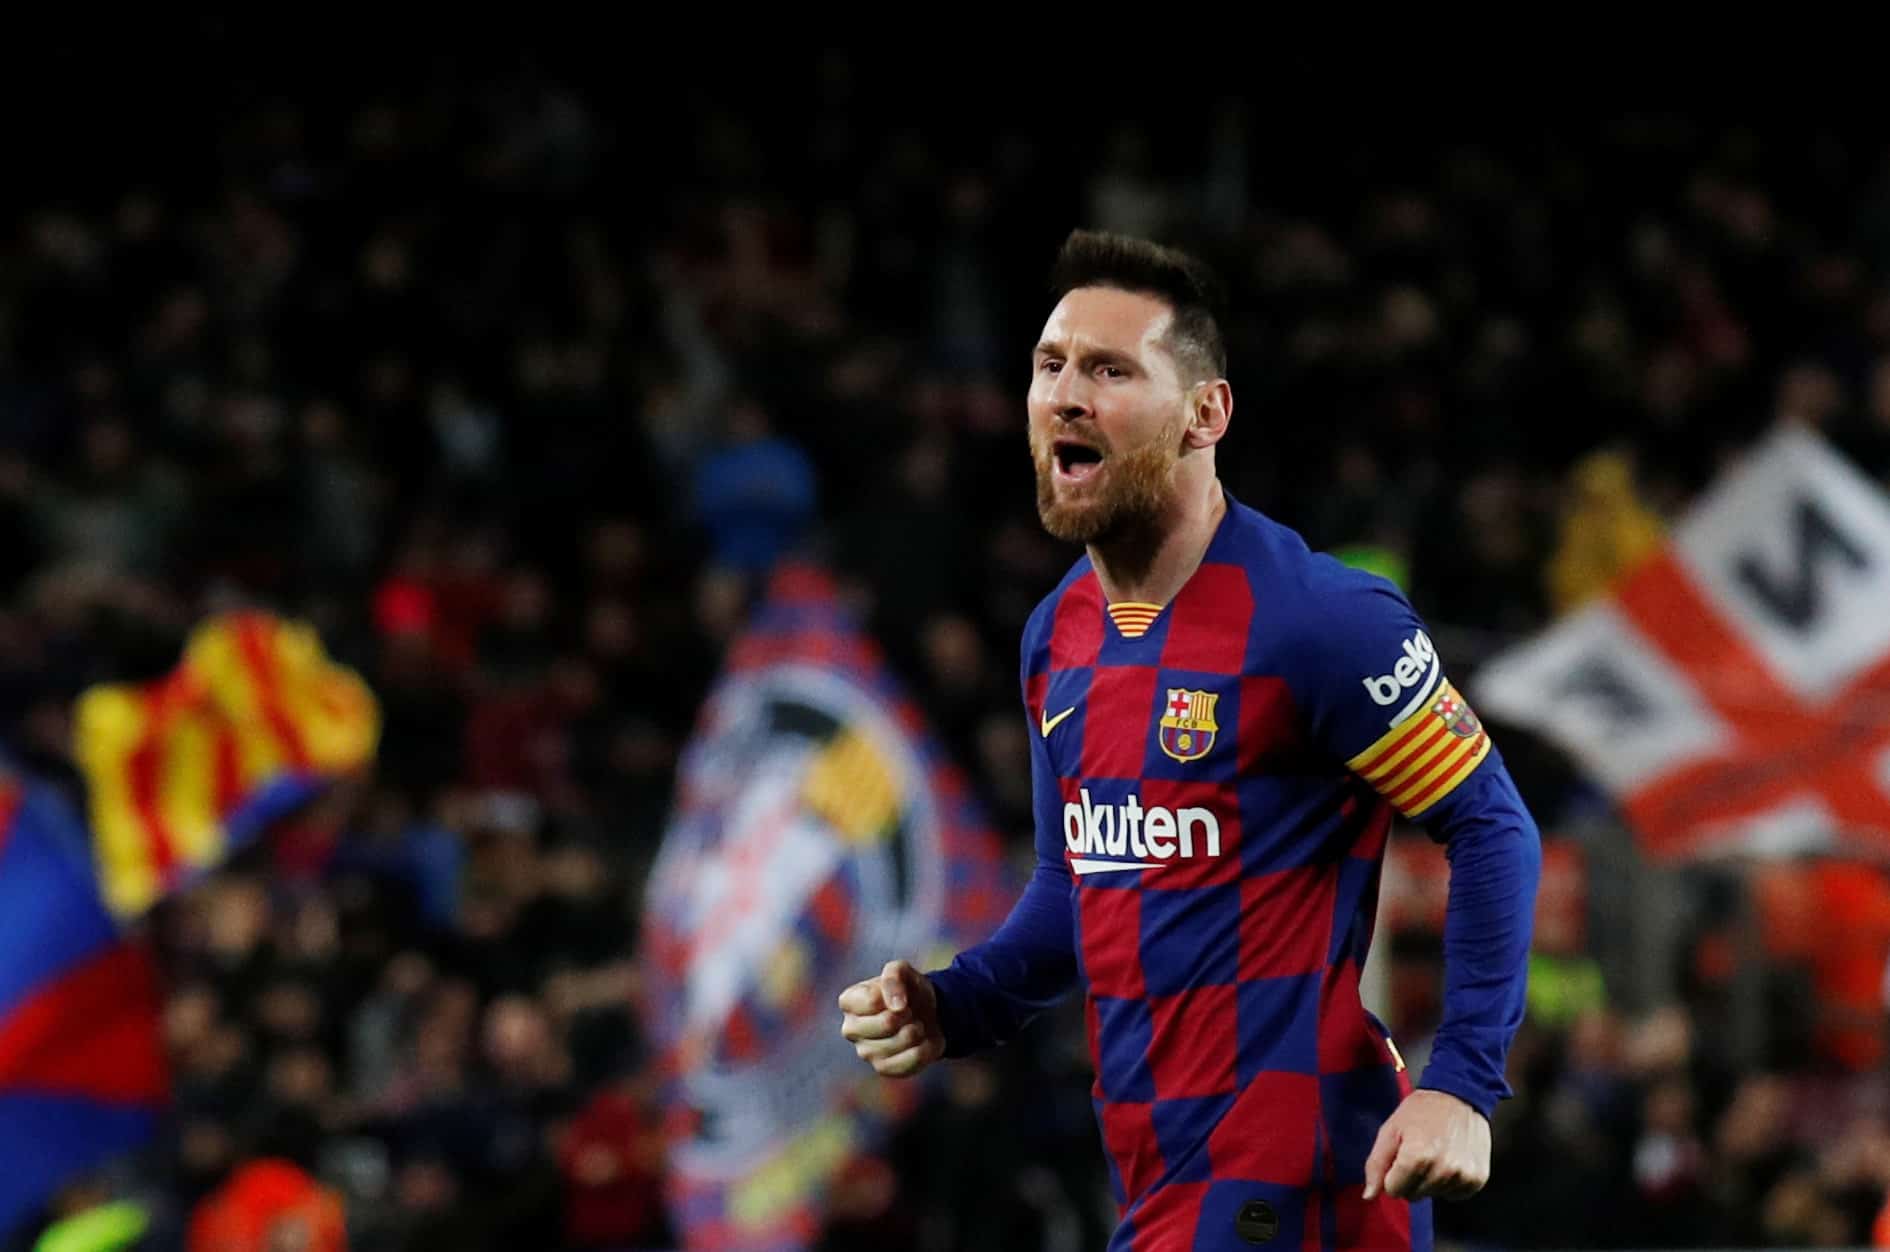 Leo Messi in happier times, celebrating scoring one of his three goals against Celta Vigo, November 9, 2019 (by REUTERS/Albert Gea)